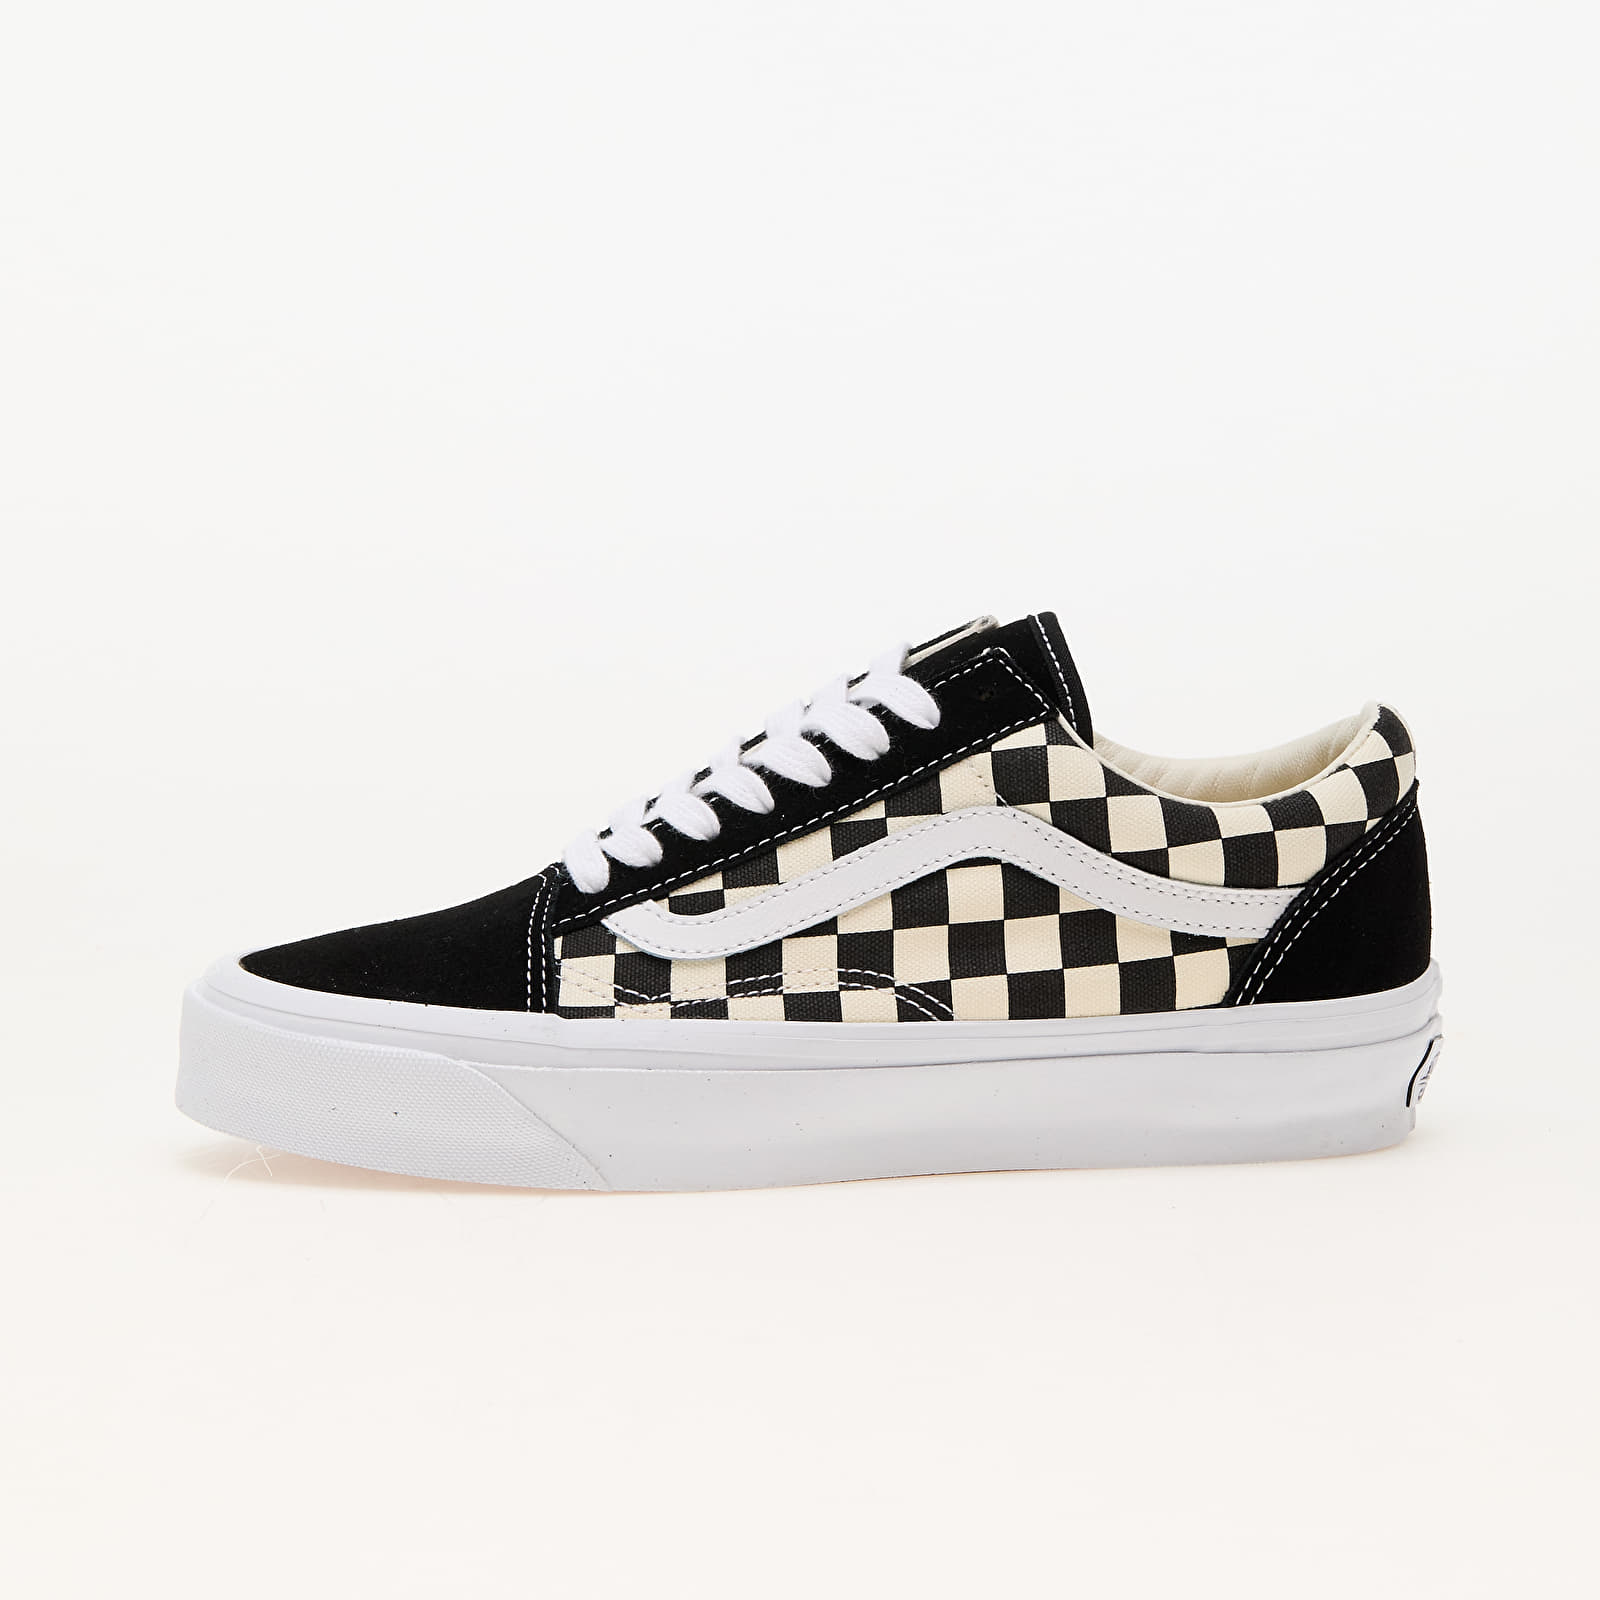 Men's shoes Vans Old Skool 36 LX Checkerboard Black/ Off White